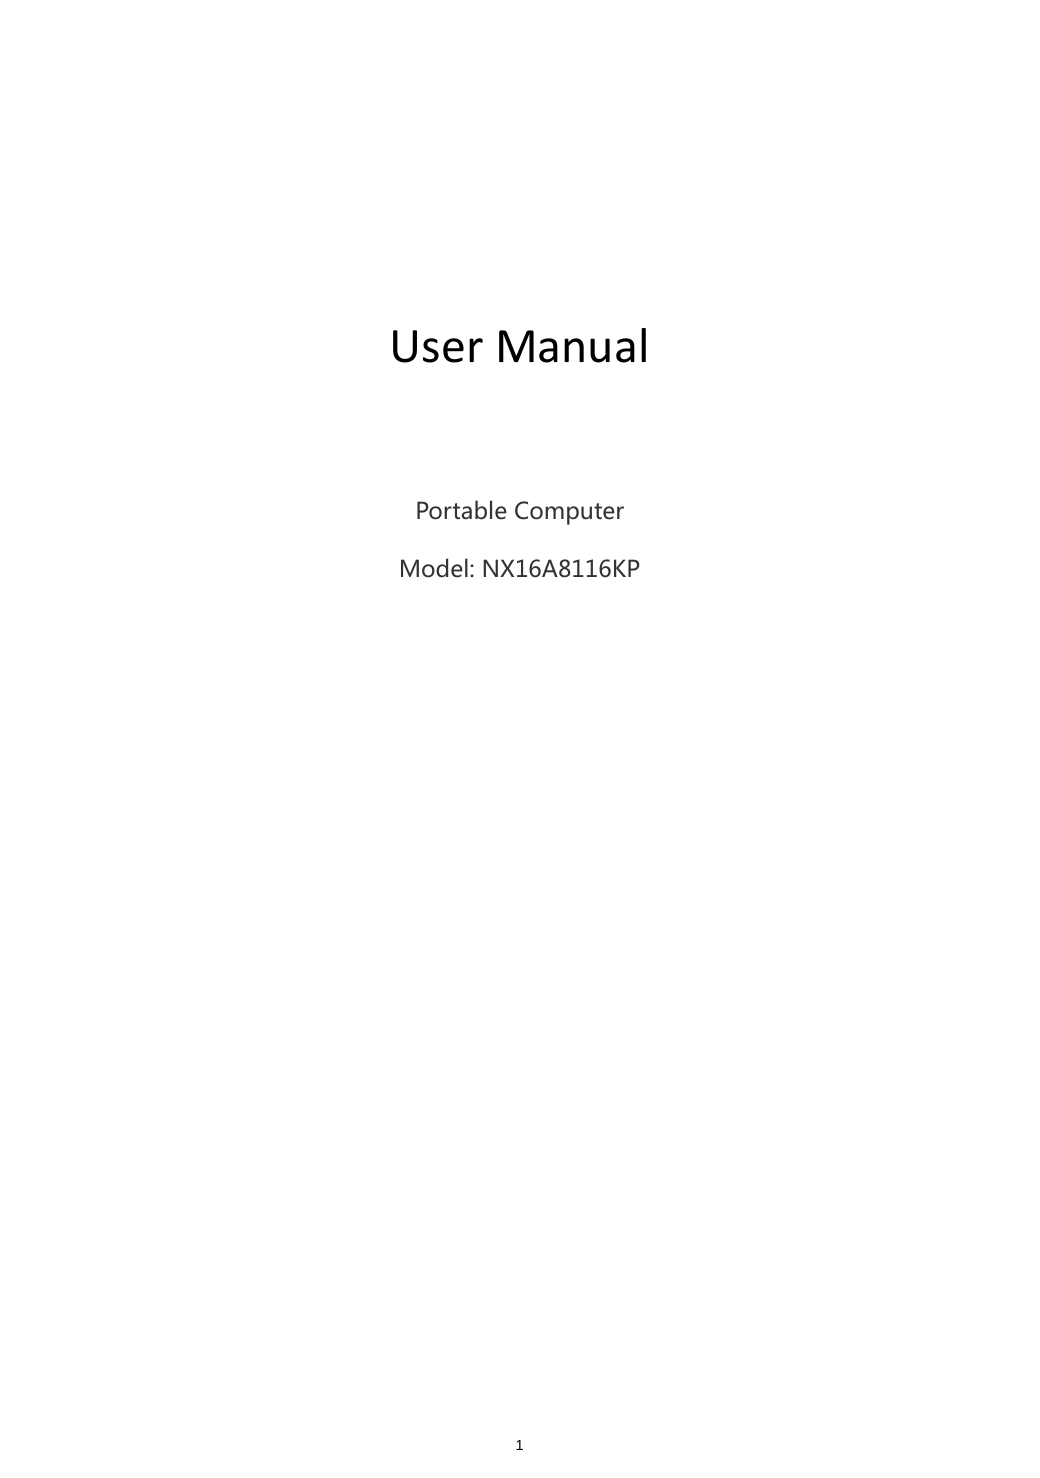  1 UserManualPortableComputerModel:NX16A8116KP